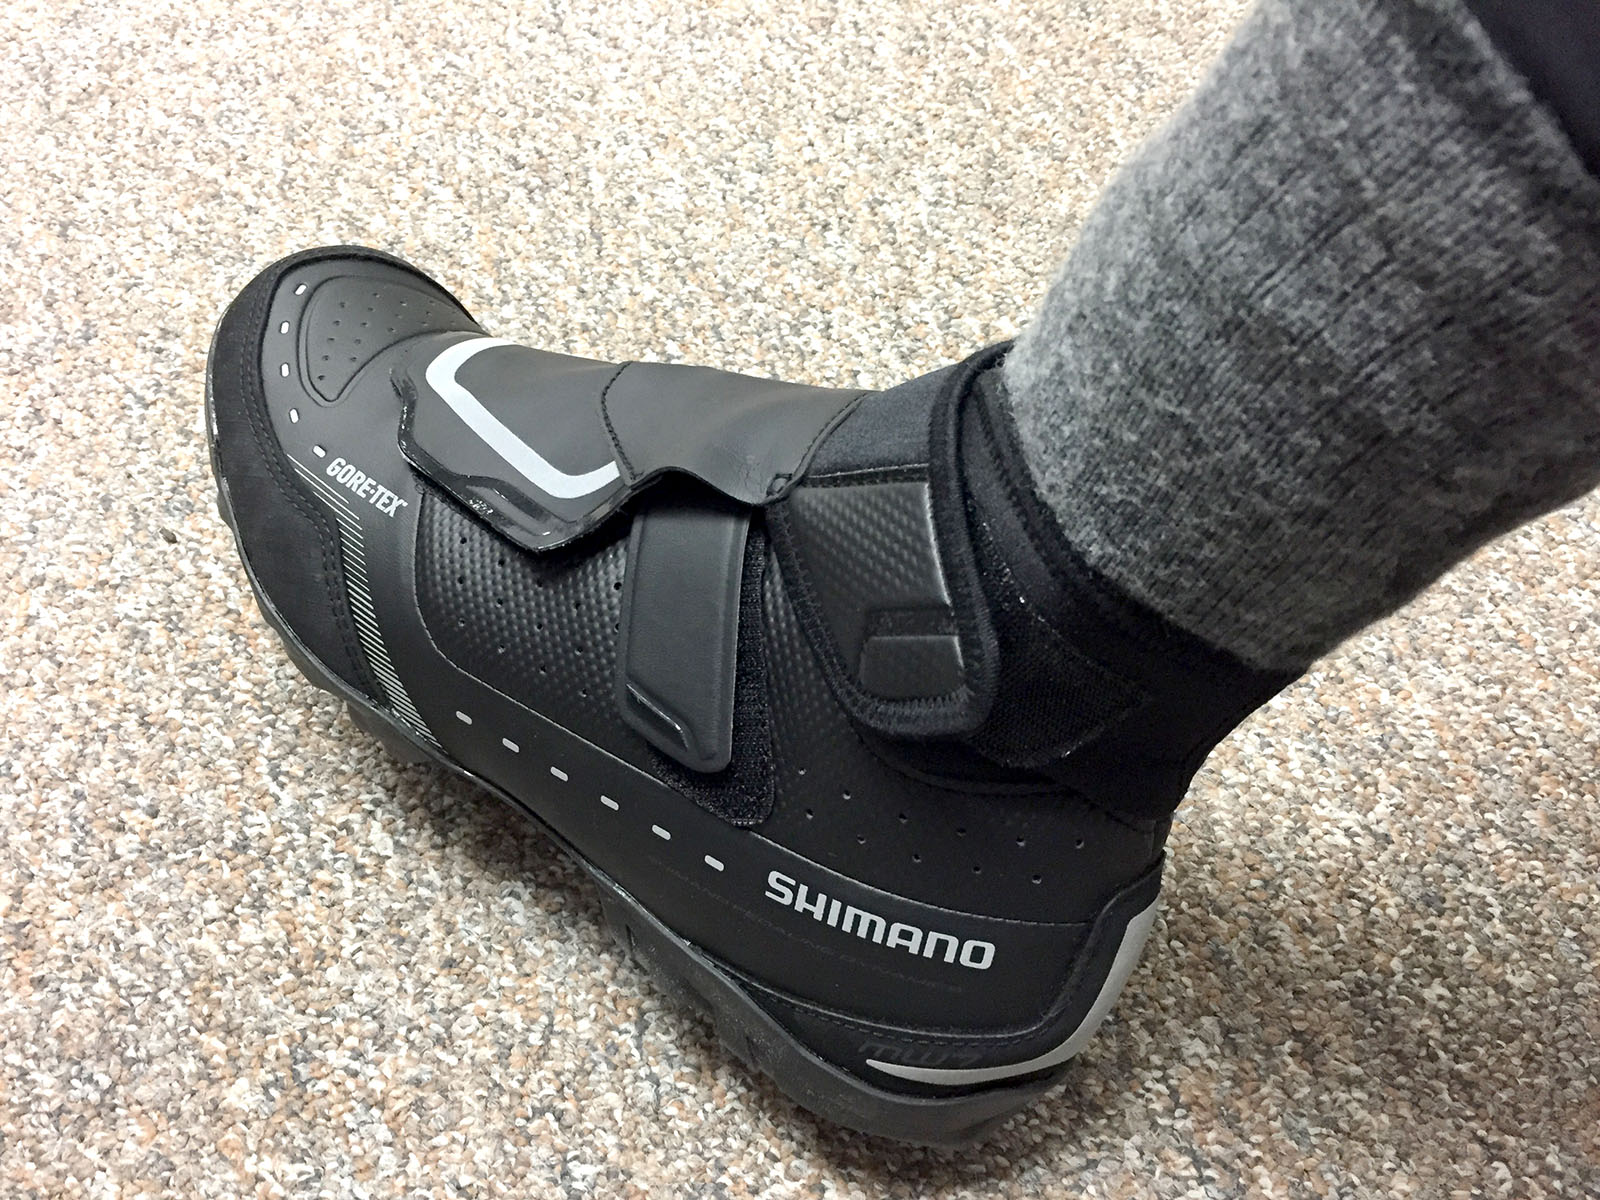 Winter Boots - Shimano MW7 2017/2018 